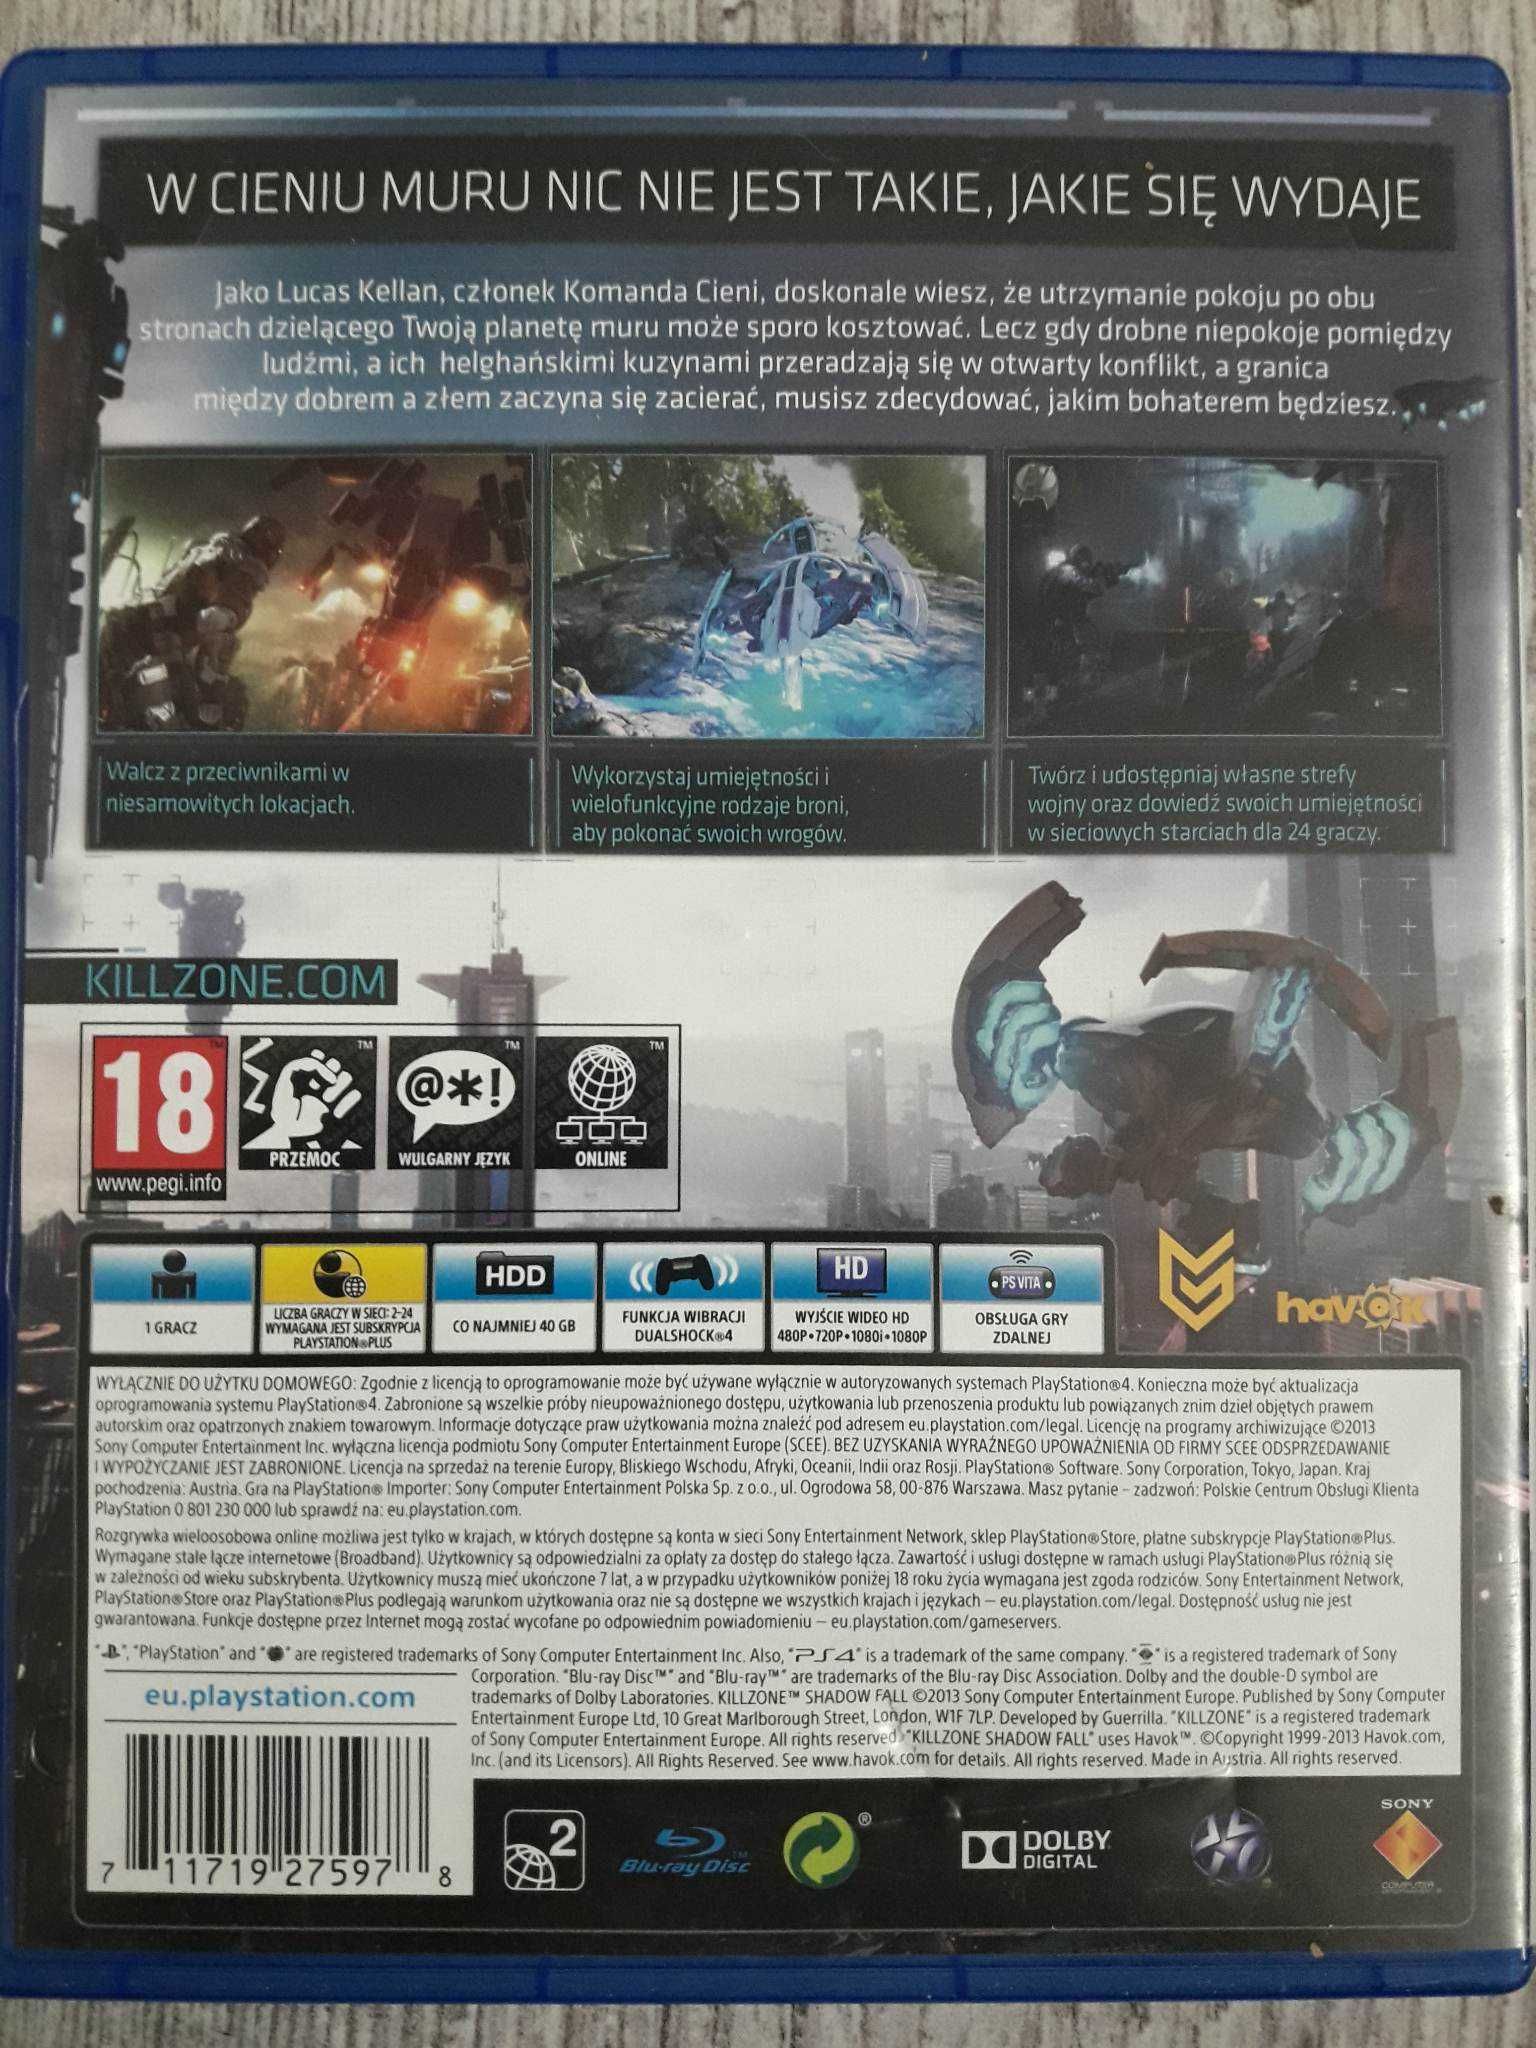 Gra Kill Zone Shadow Fall PS4/PS5 Polska Wersja Playstation